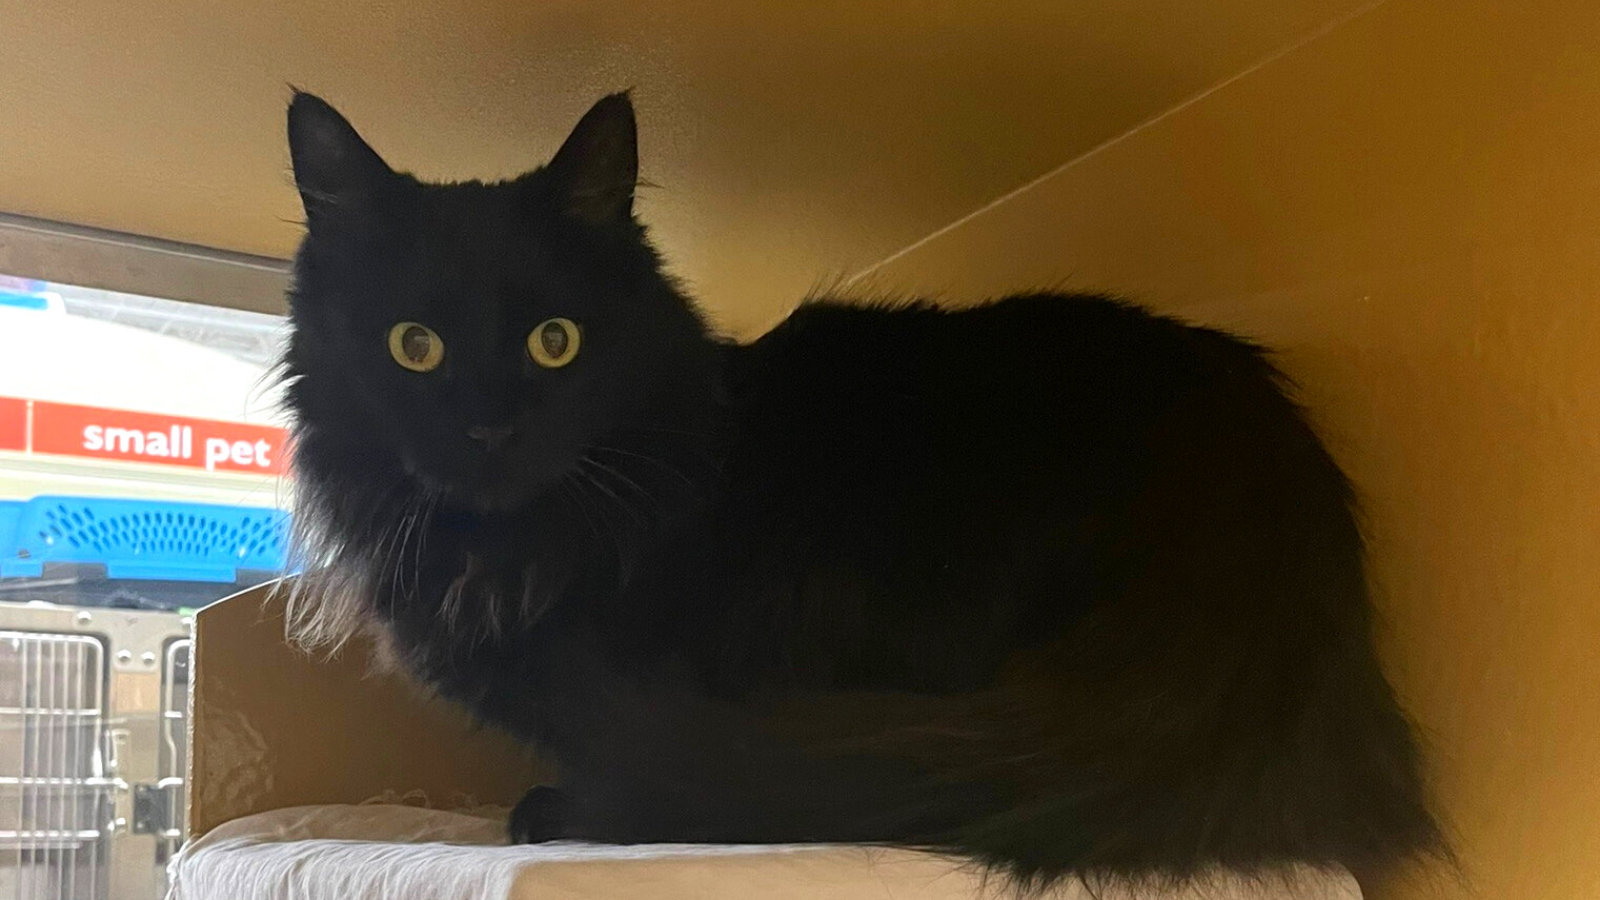 A longhaired black cat inside a PetSmart store adoption center